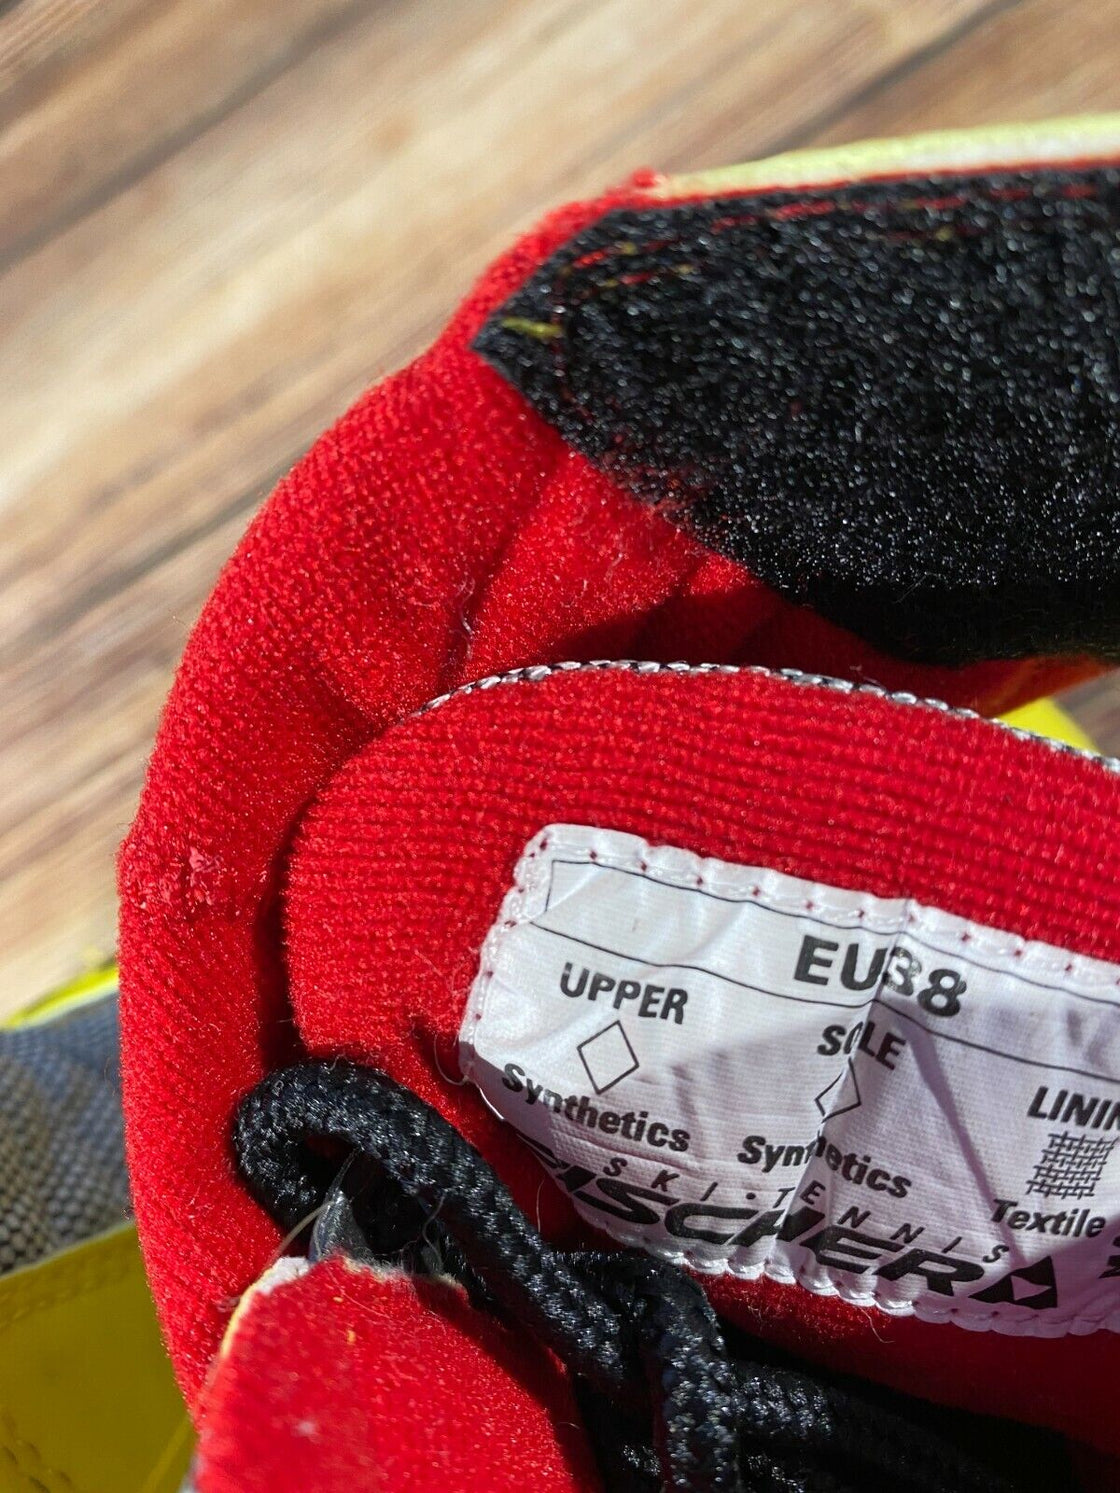 Fischer CS Classic RF Cross Country Ski Boots Size EU38 US6 for SNS Profil